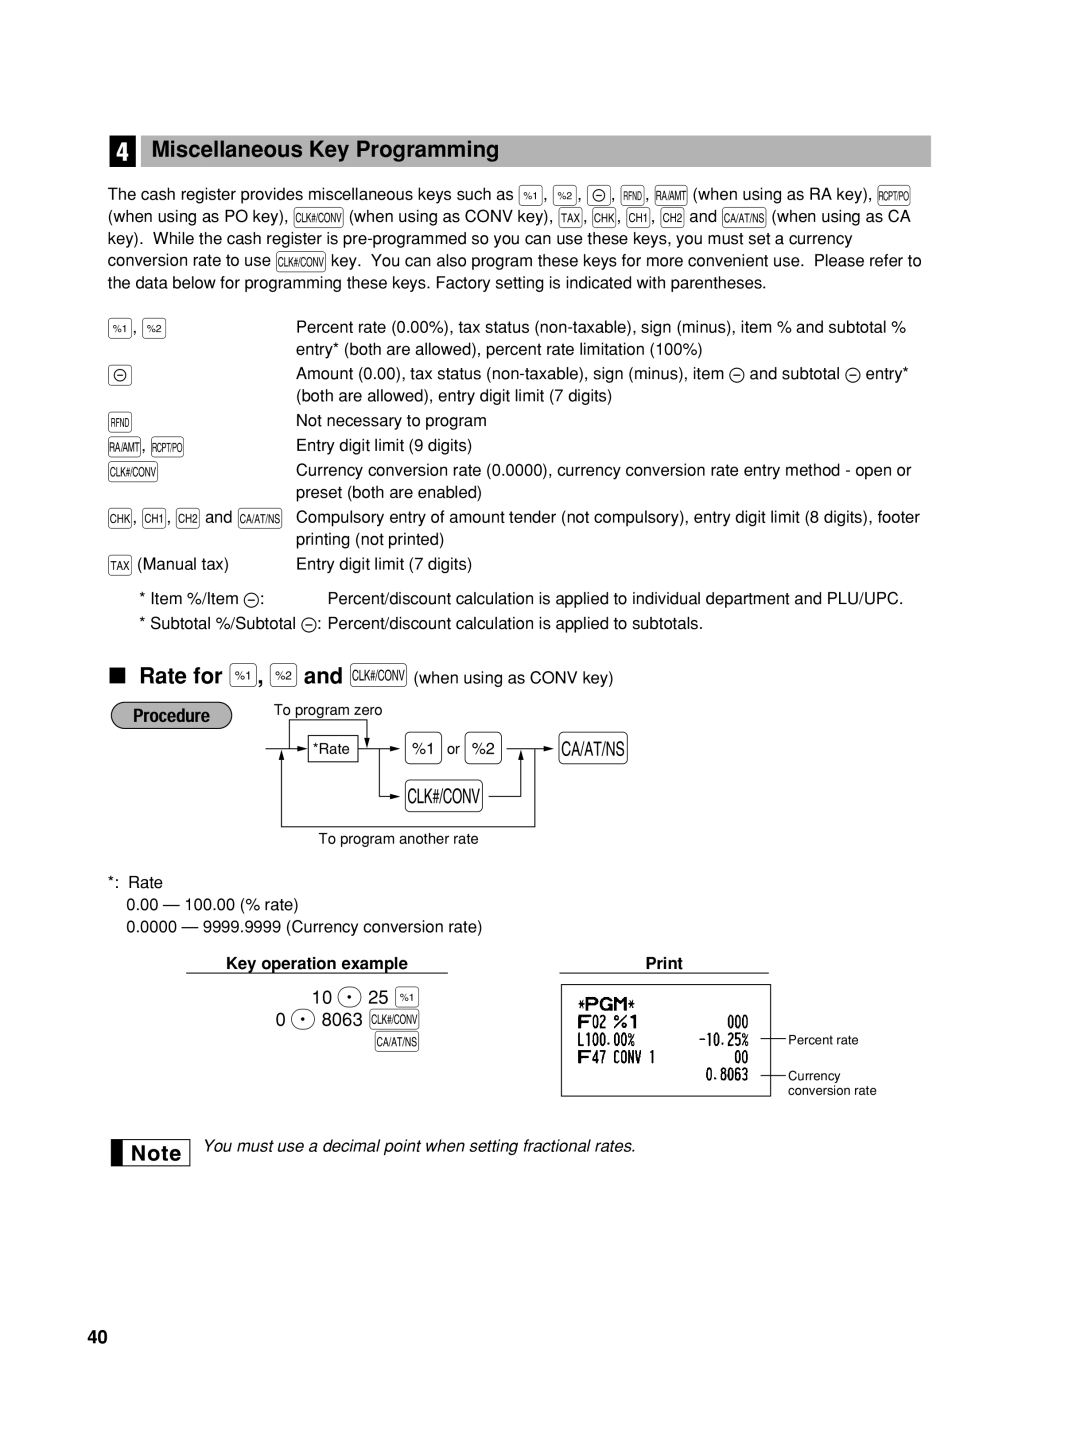 Sharp XE-A42S instruction manual q, R, Miscellaneous Key Programming, 10 P 25 % 0 P 8063 K, Key operation example, Print 